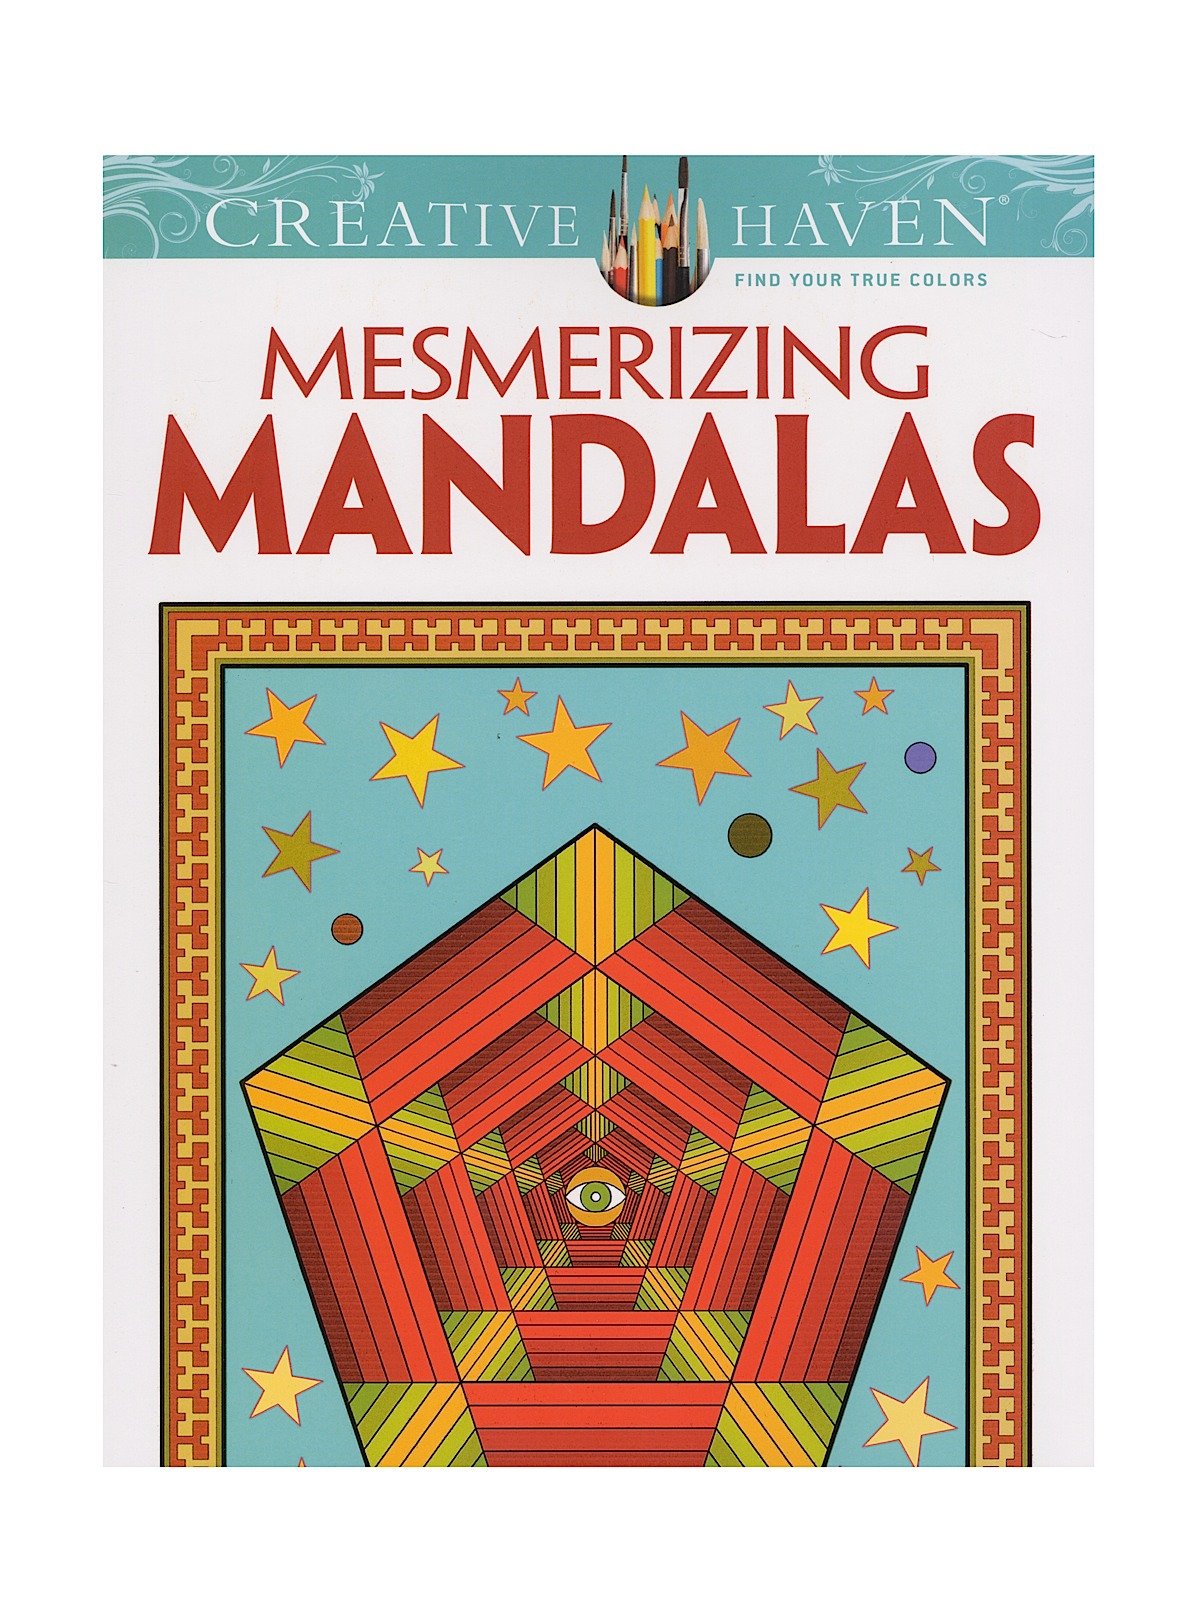 Modern Mandalas